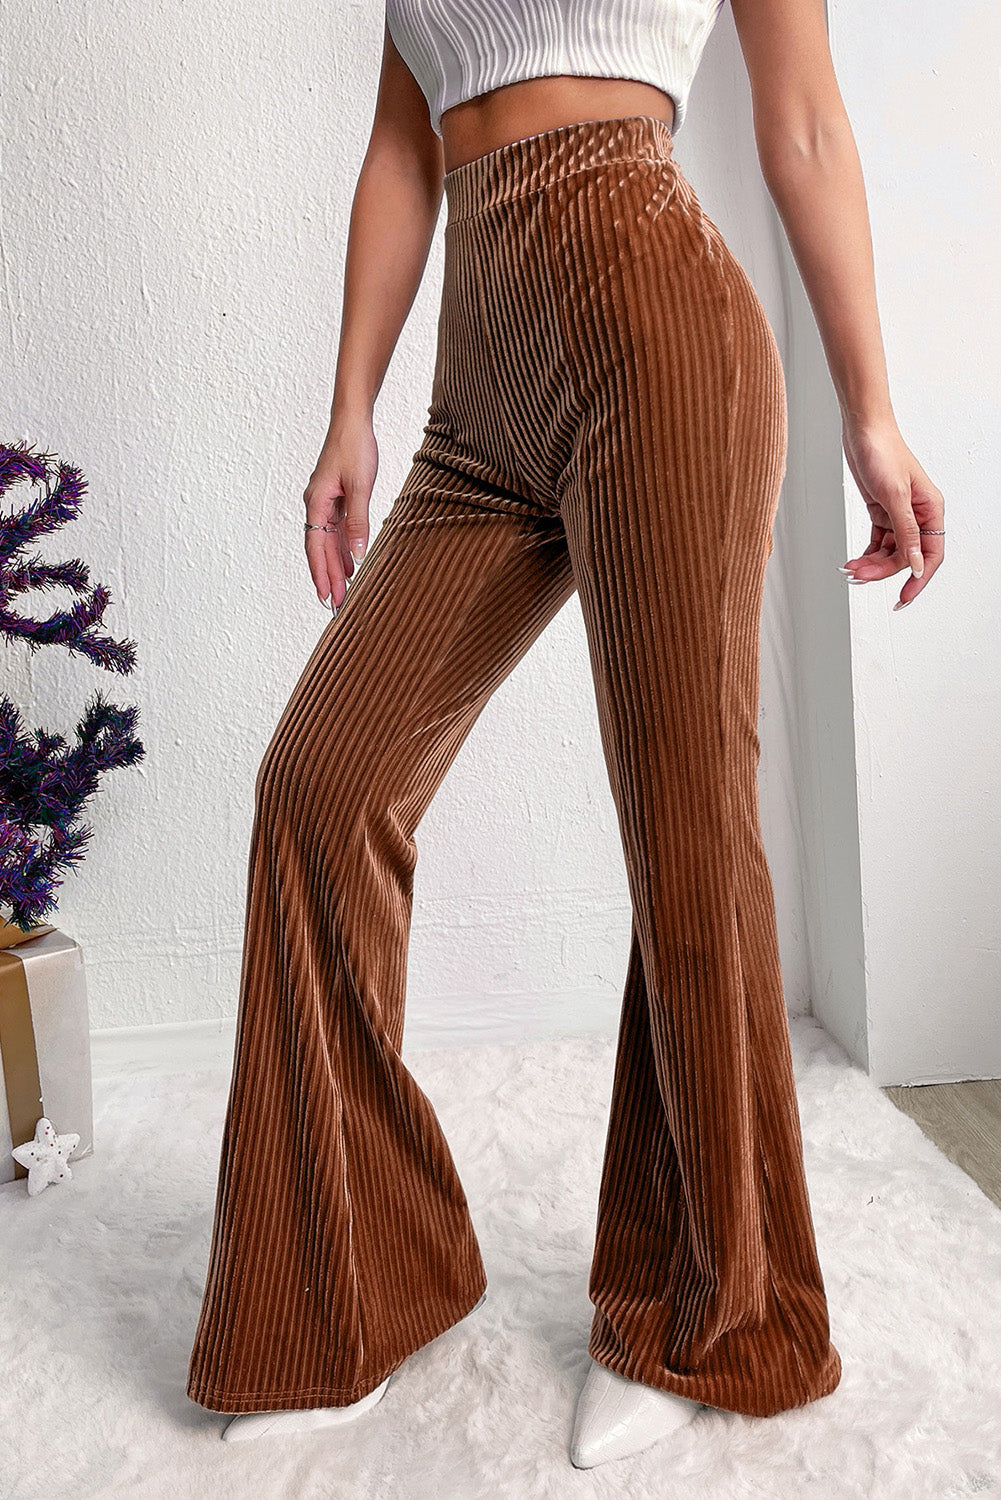 Chestnut Solid Color High Waist Flare Corduroy Womens Pants - US2EInc Apparel Plug Ltd. Co